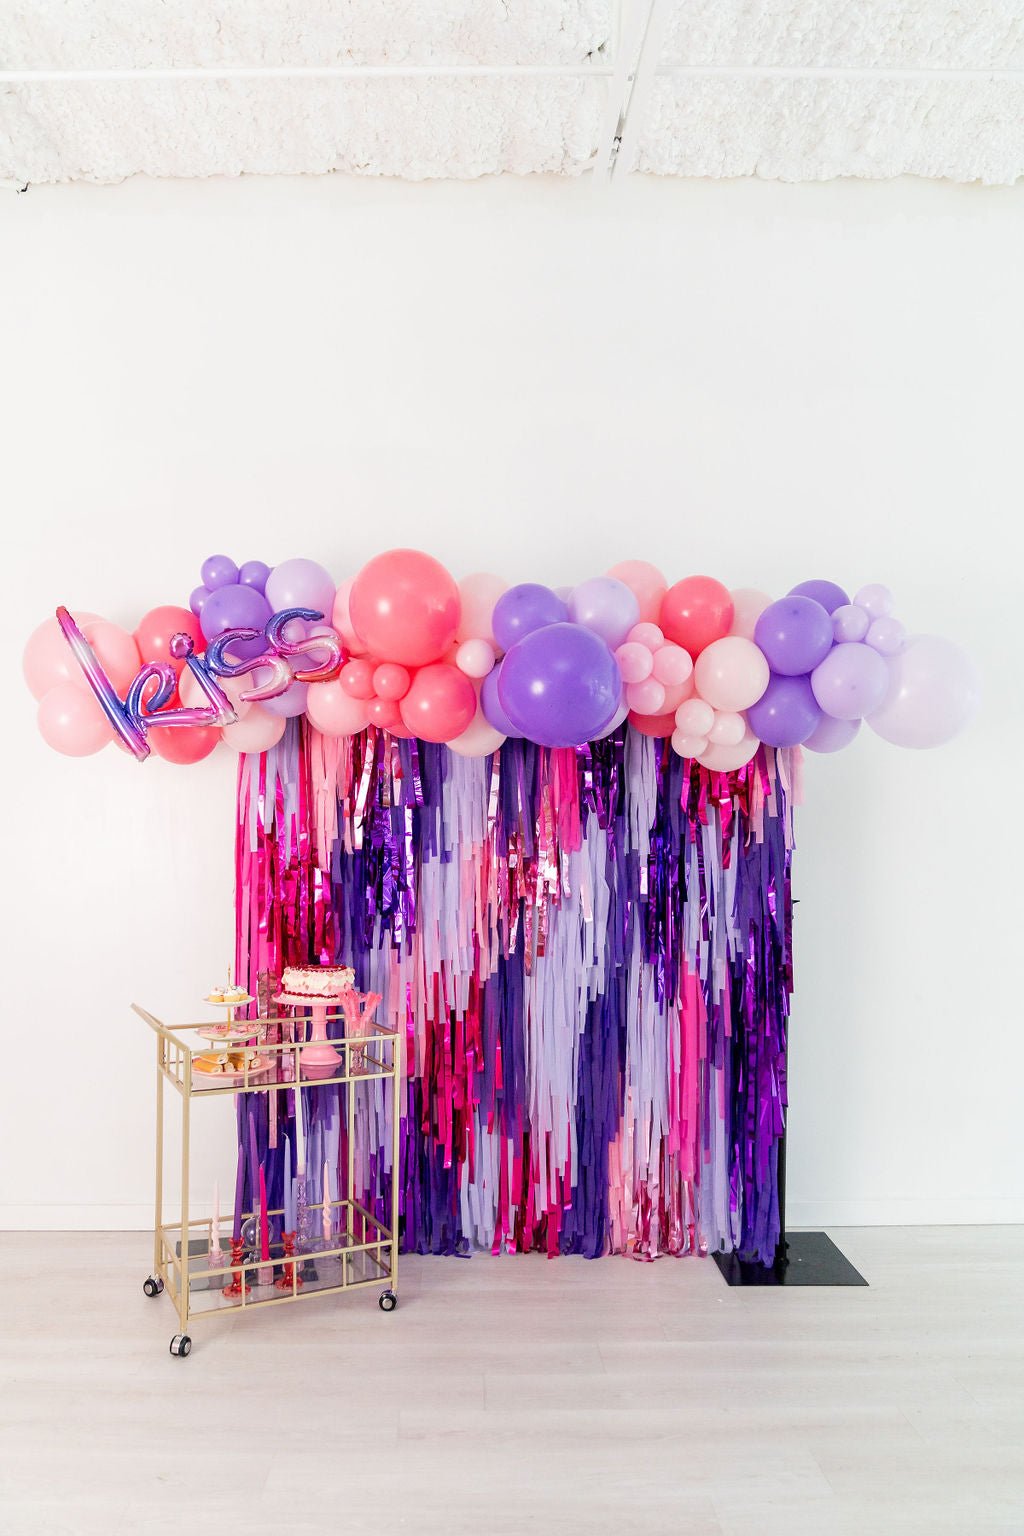 Iris & Lilac Fringe Backdrop - Oh My Darling Party Co-baby showerbirthday decorationsbridal #Fringe_Backdrop#